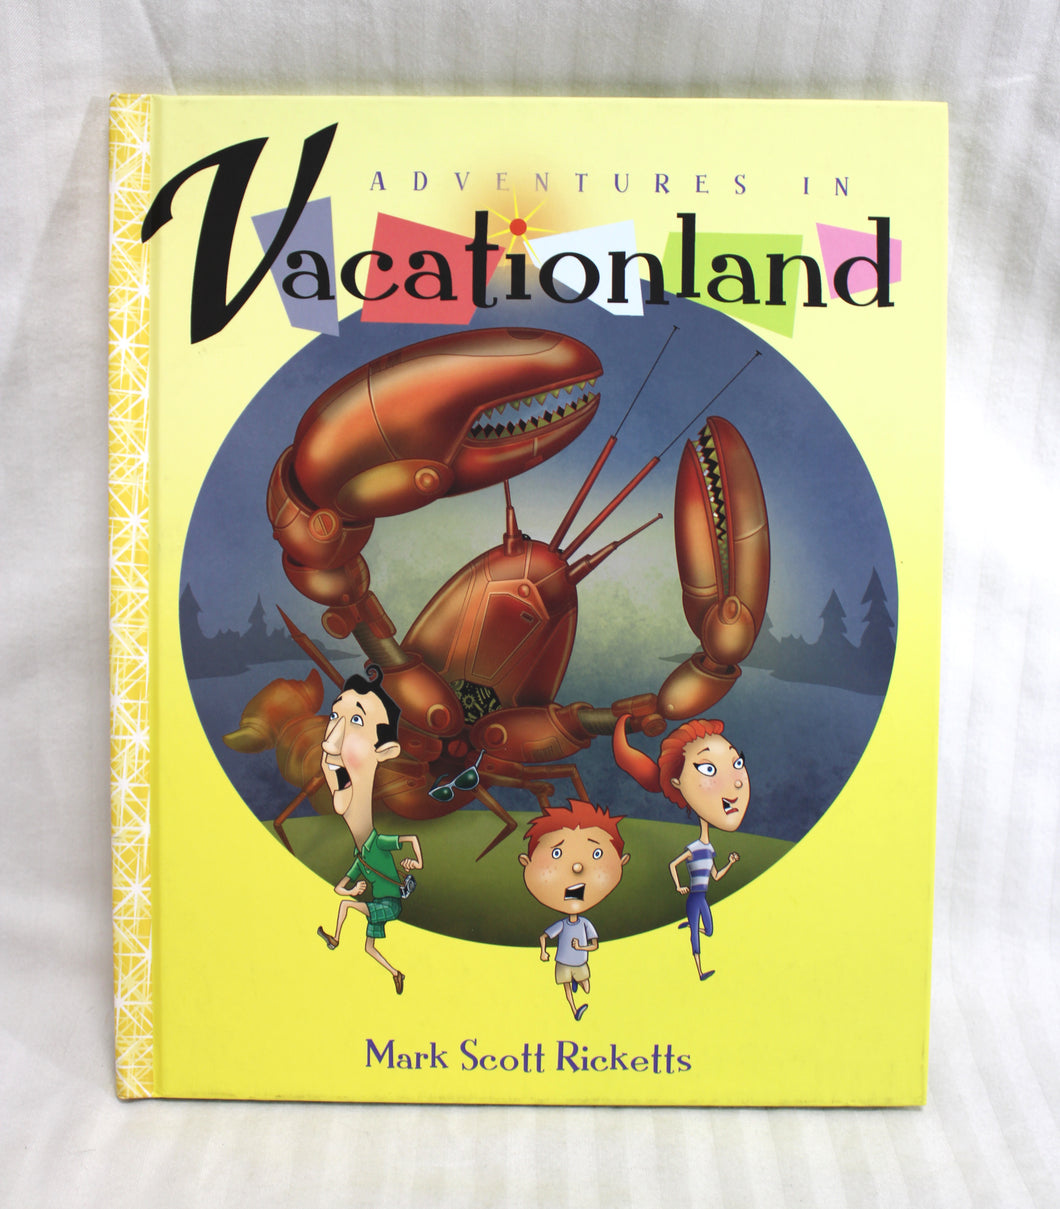 Adventures in Vacationland - Mark Scott Rickets - Hardback Children's Book